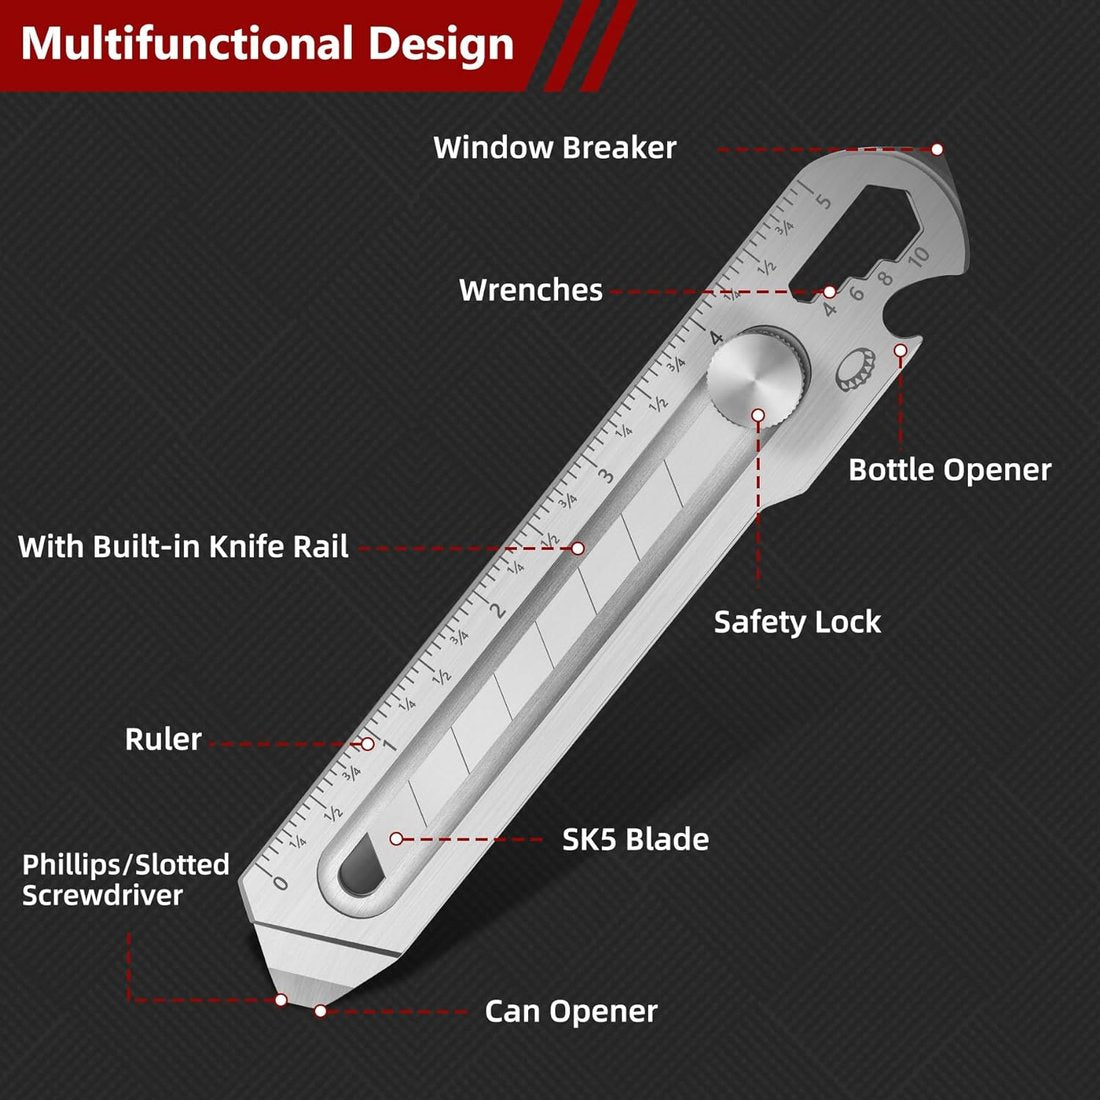 6-in-1 Multipurpose Utility Knife